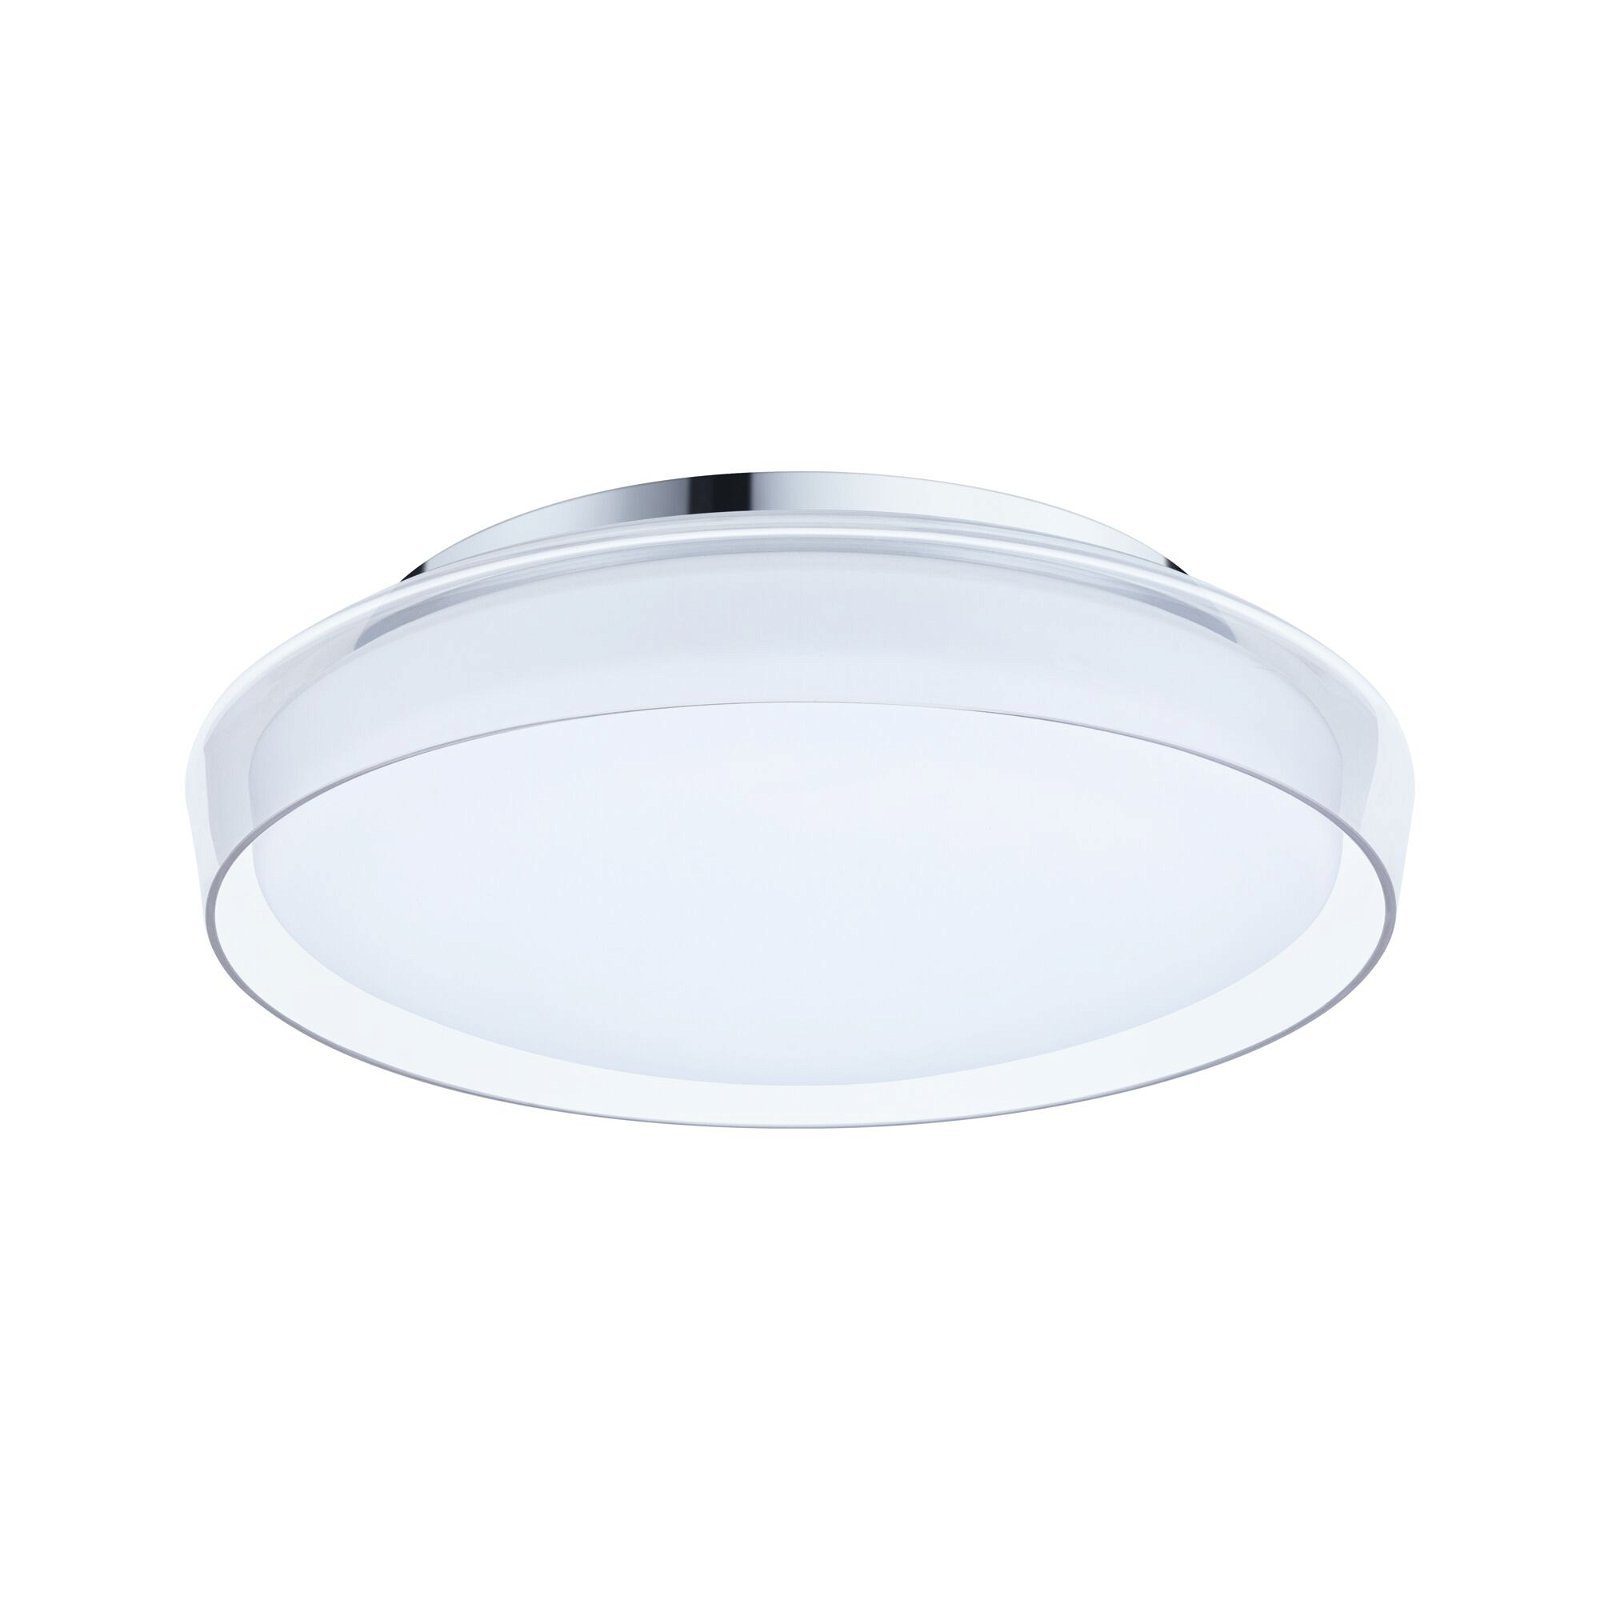 LED LED IP44 16,5W Glas/Metall, Chrom Luena Bathroom integriert, Warmweiß Deckenleuchte 230V 3000K Paulmann Selection fest